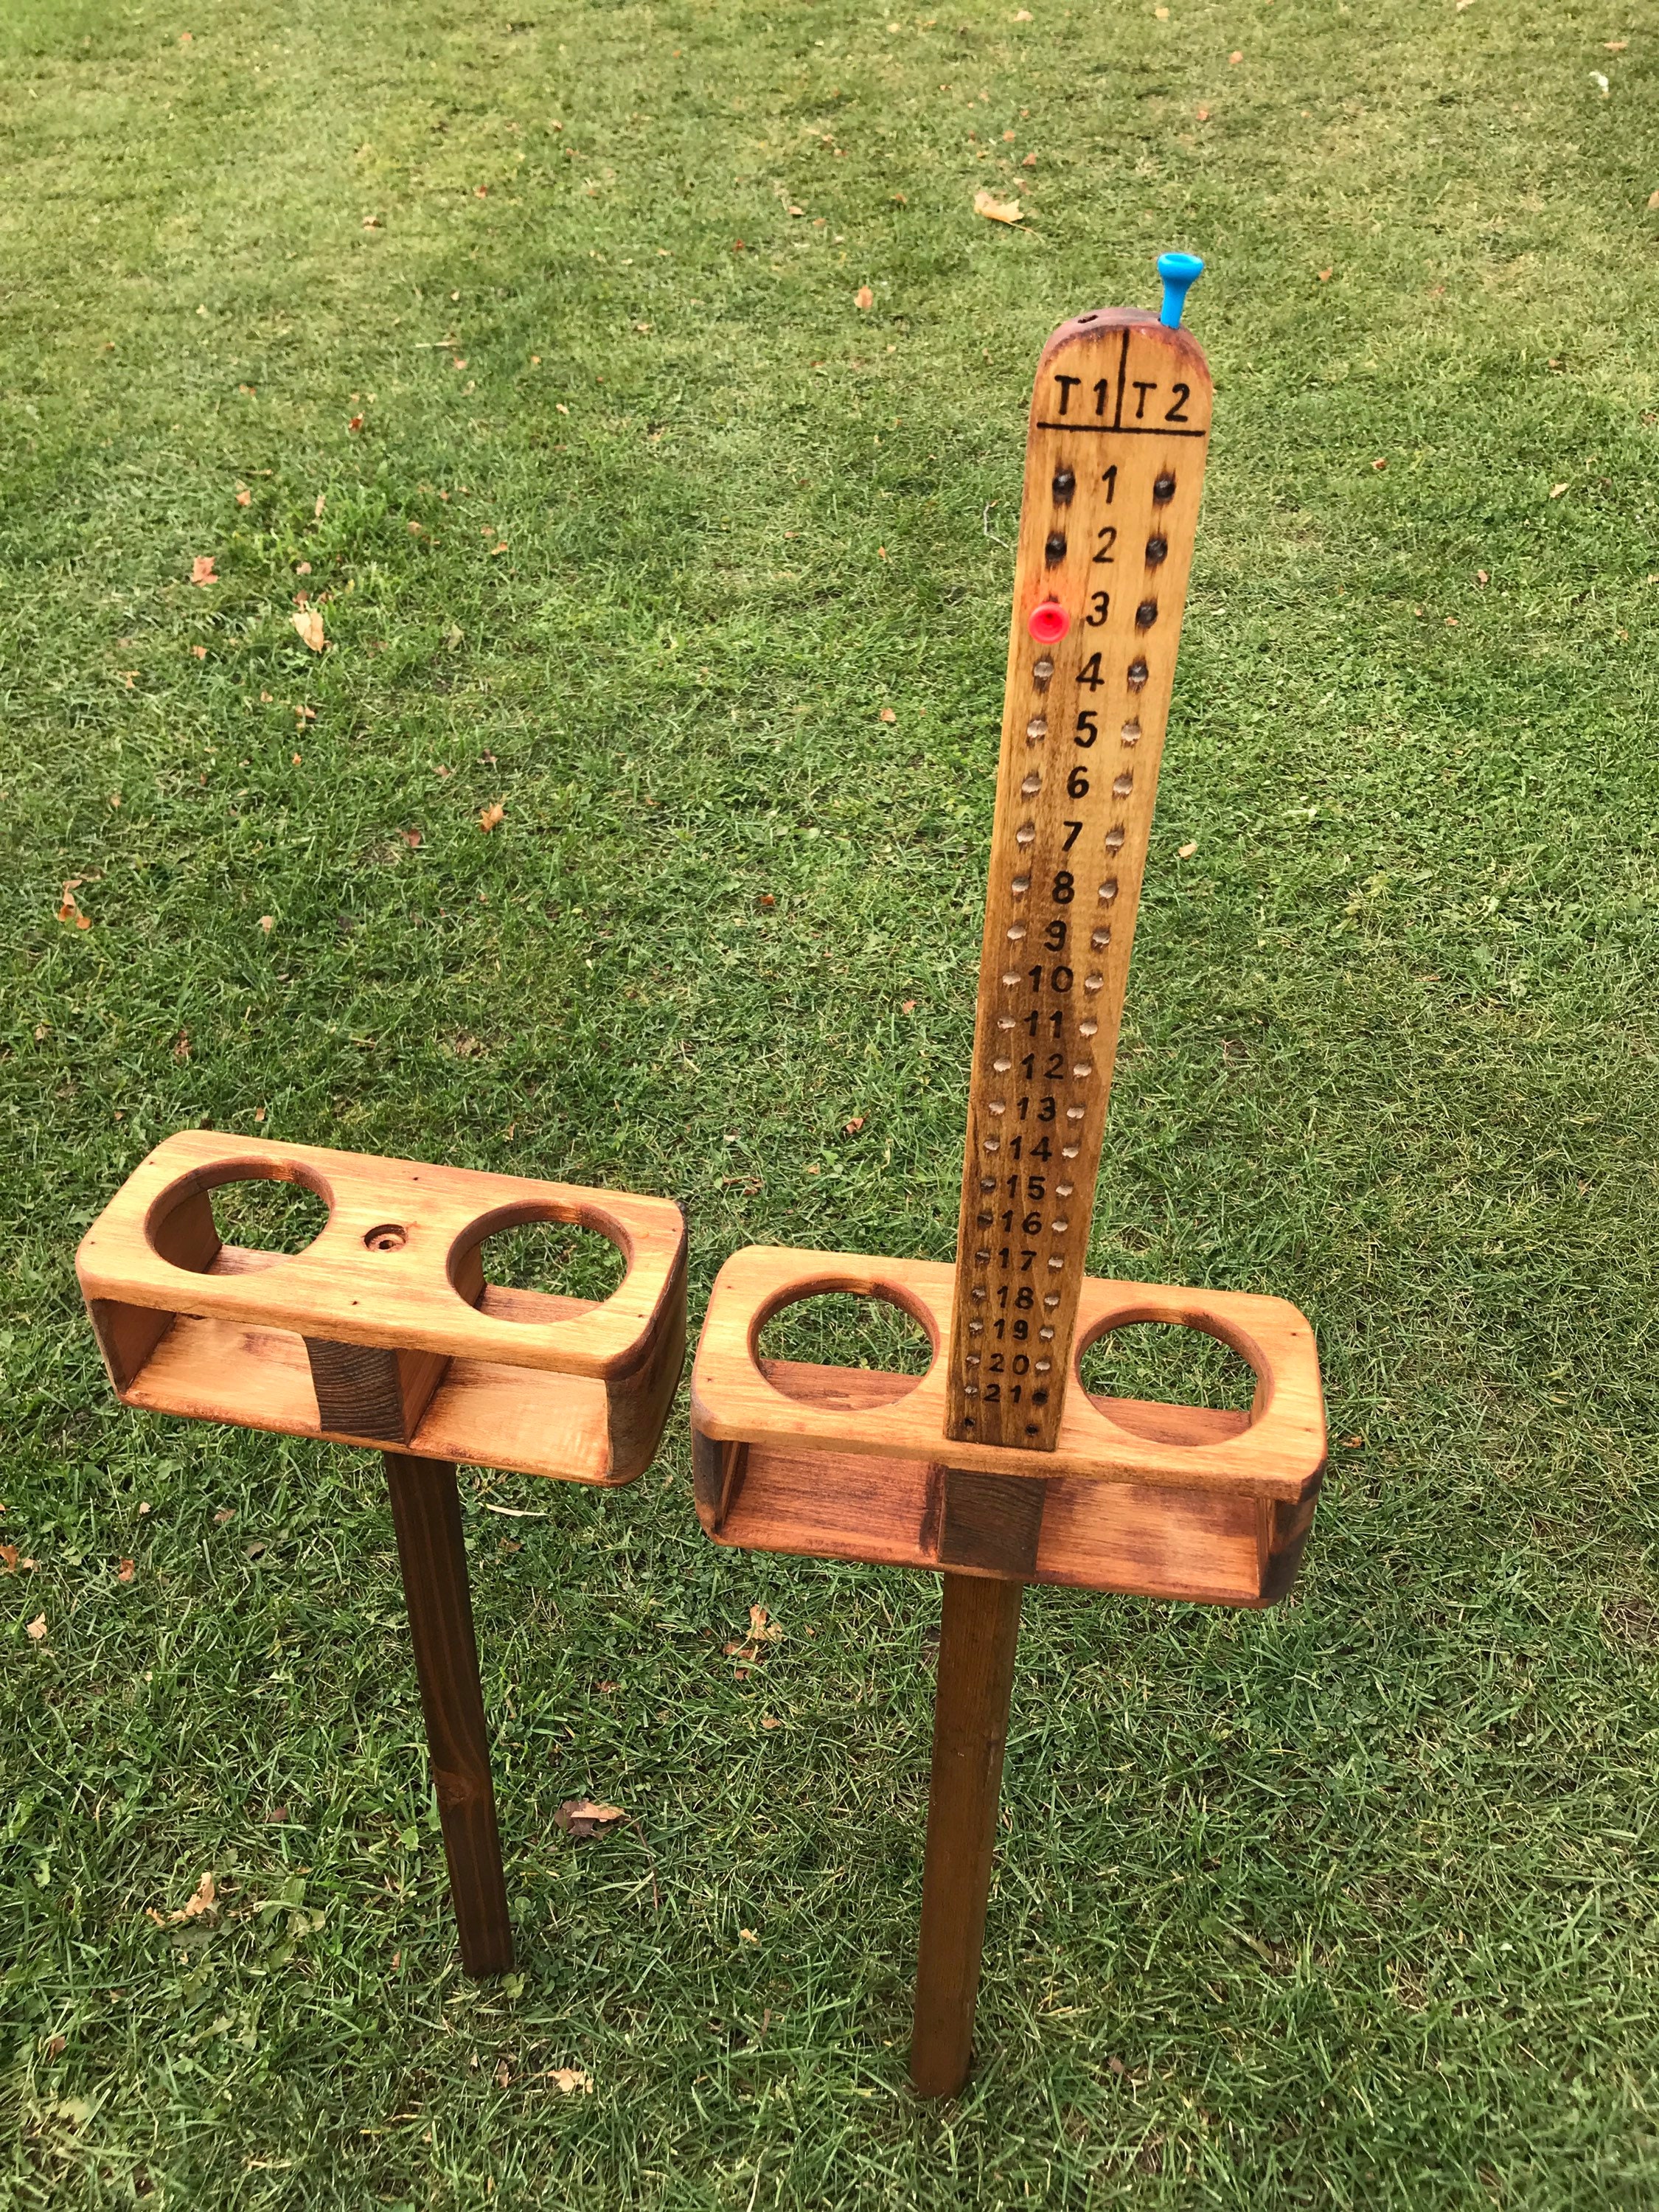 Scoring Tower Drink Holder - Play Backyard Games